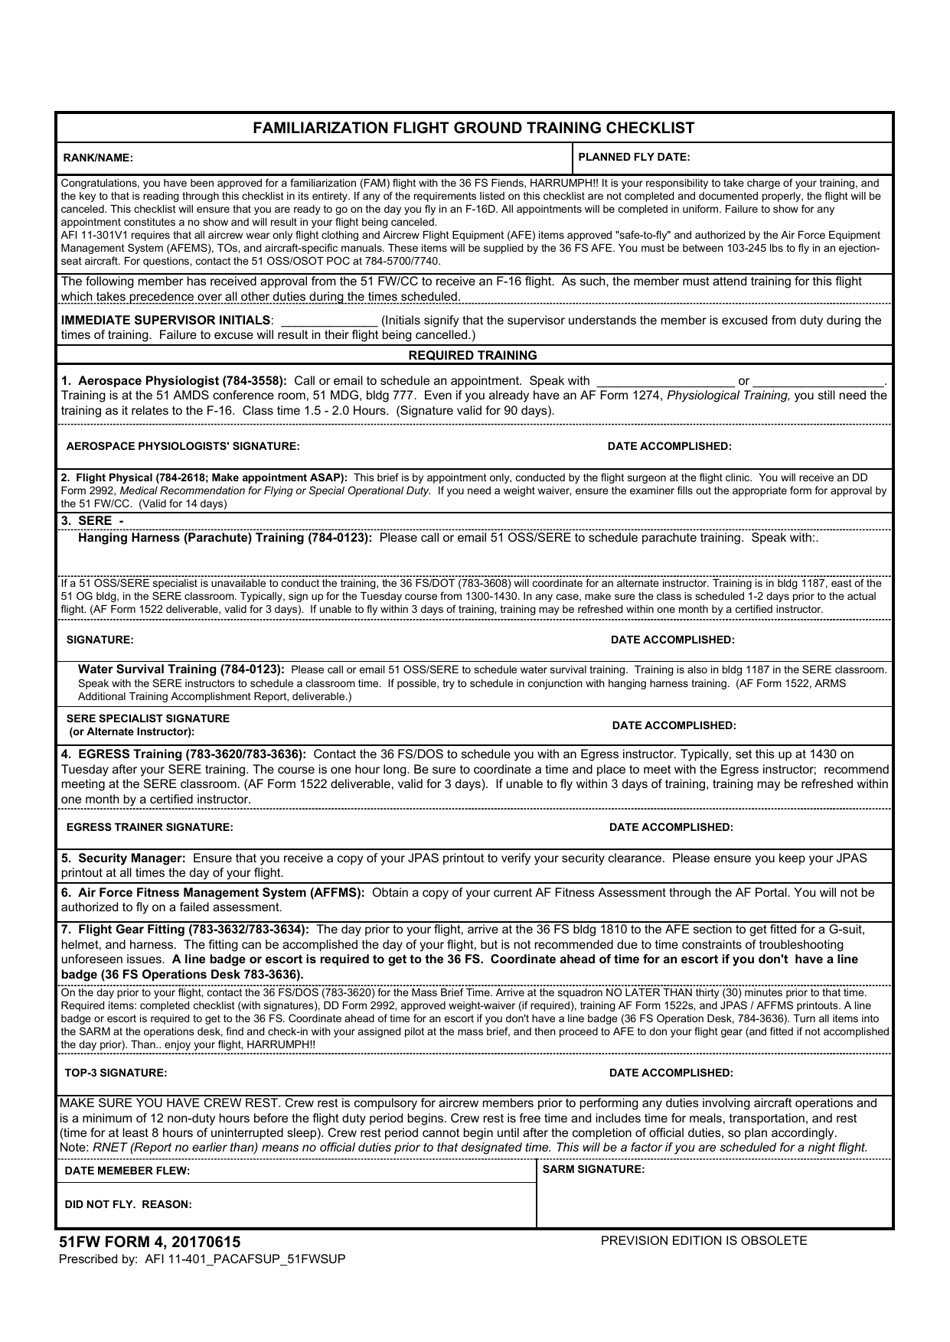 51 FW Form 4 Familiarization Flight Ground Training Checklist, Page 1